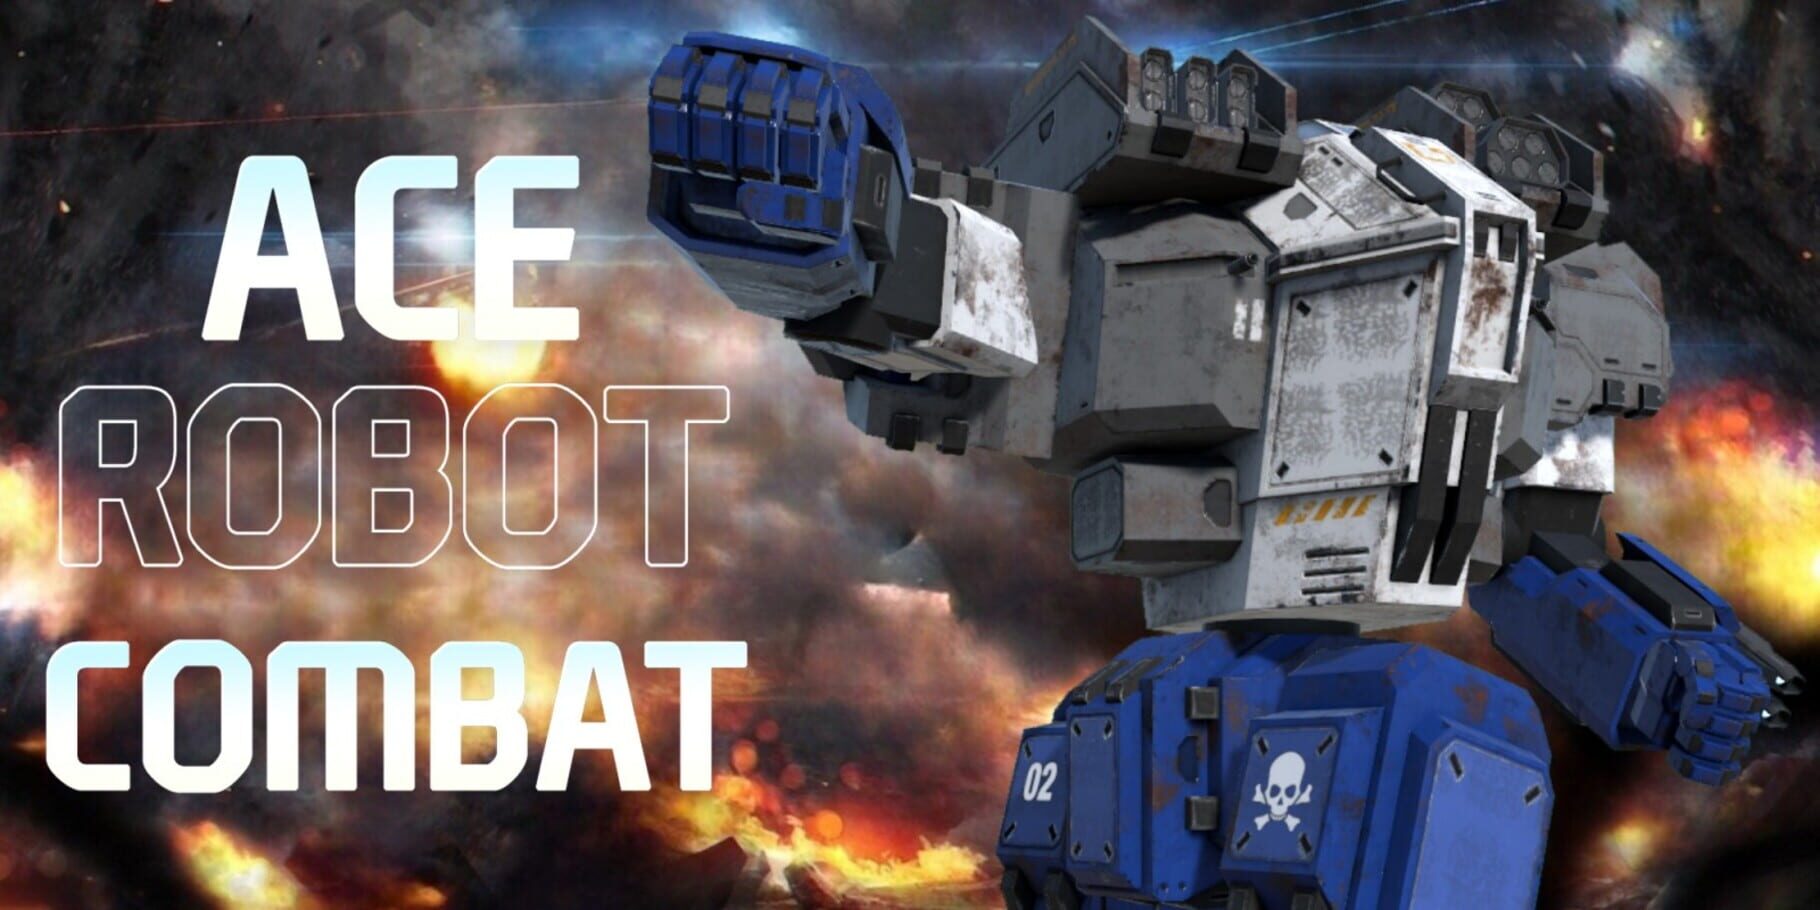 Ace Robot Combat artwork